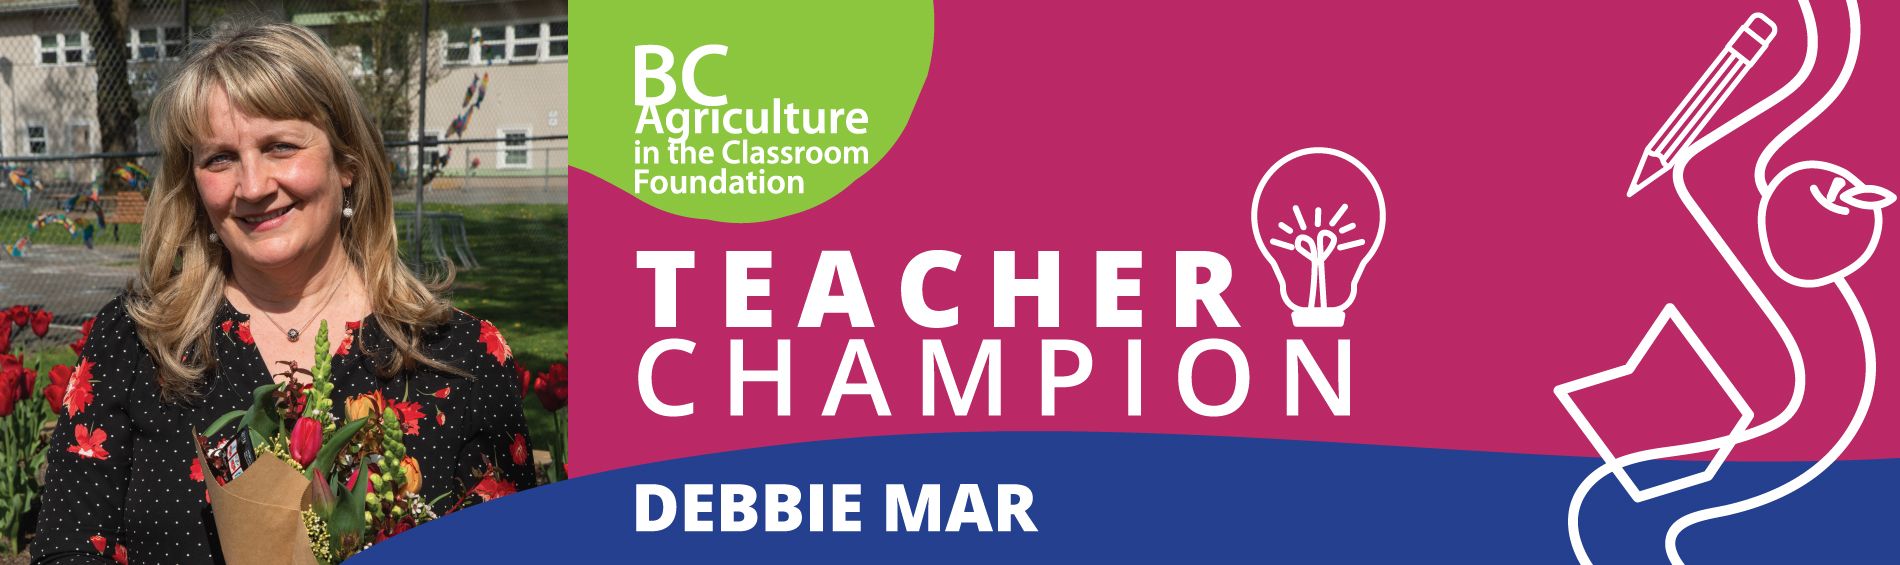 Debbie Mar - Teacher Champion